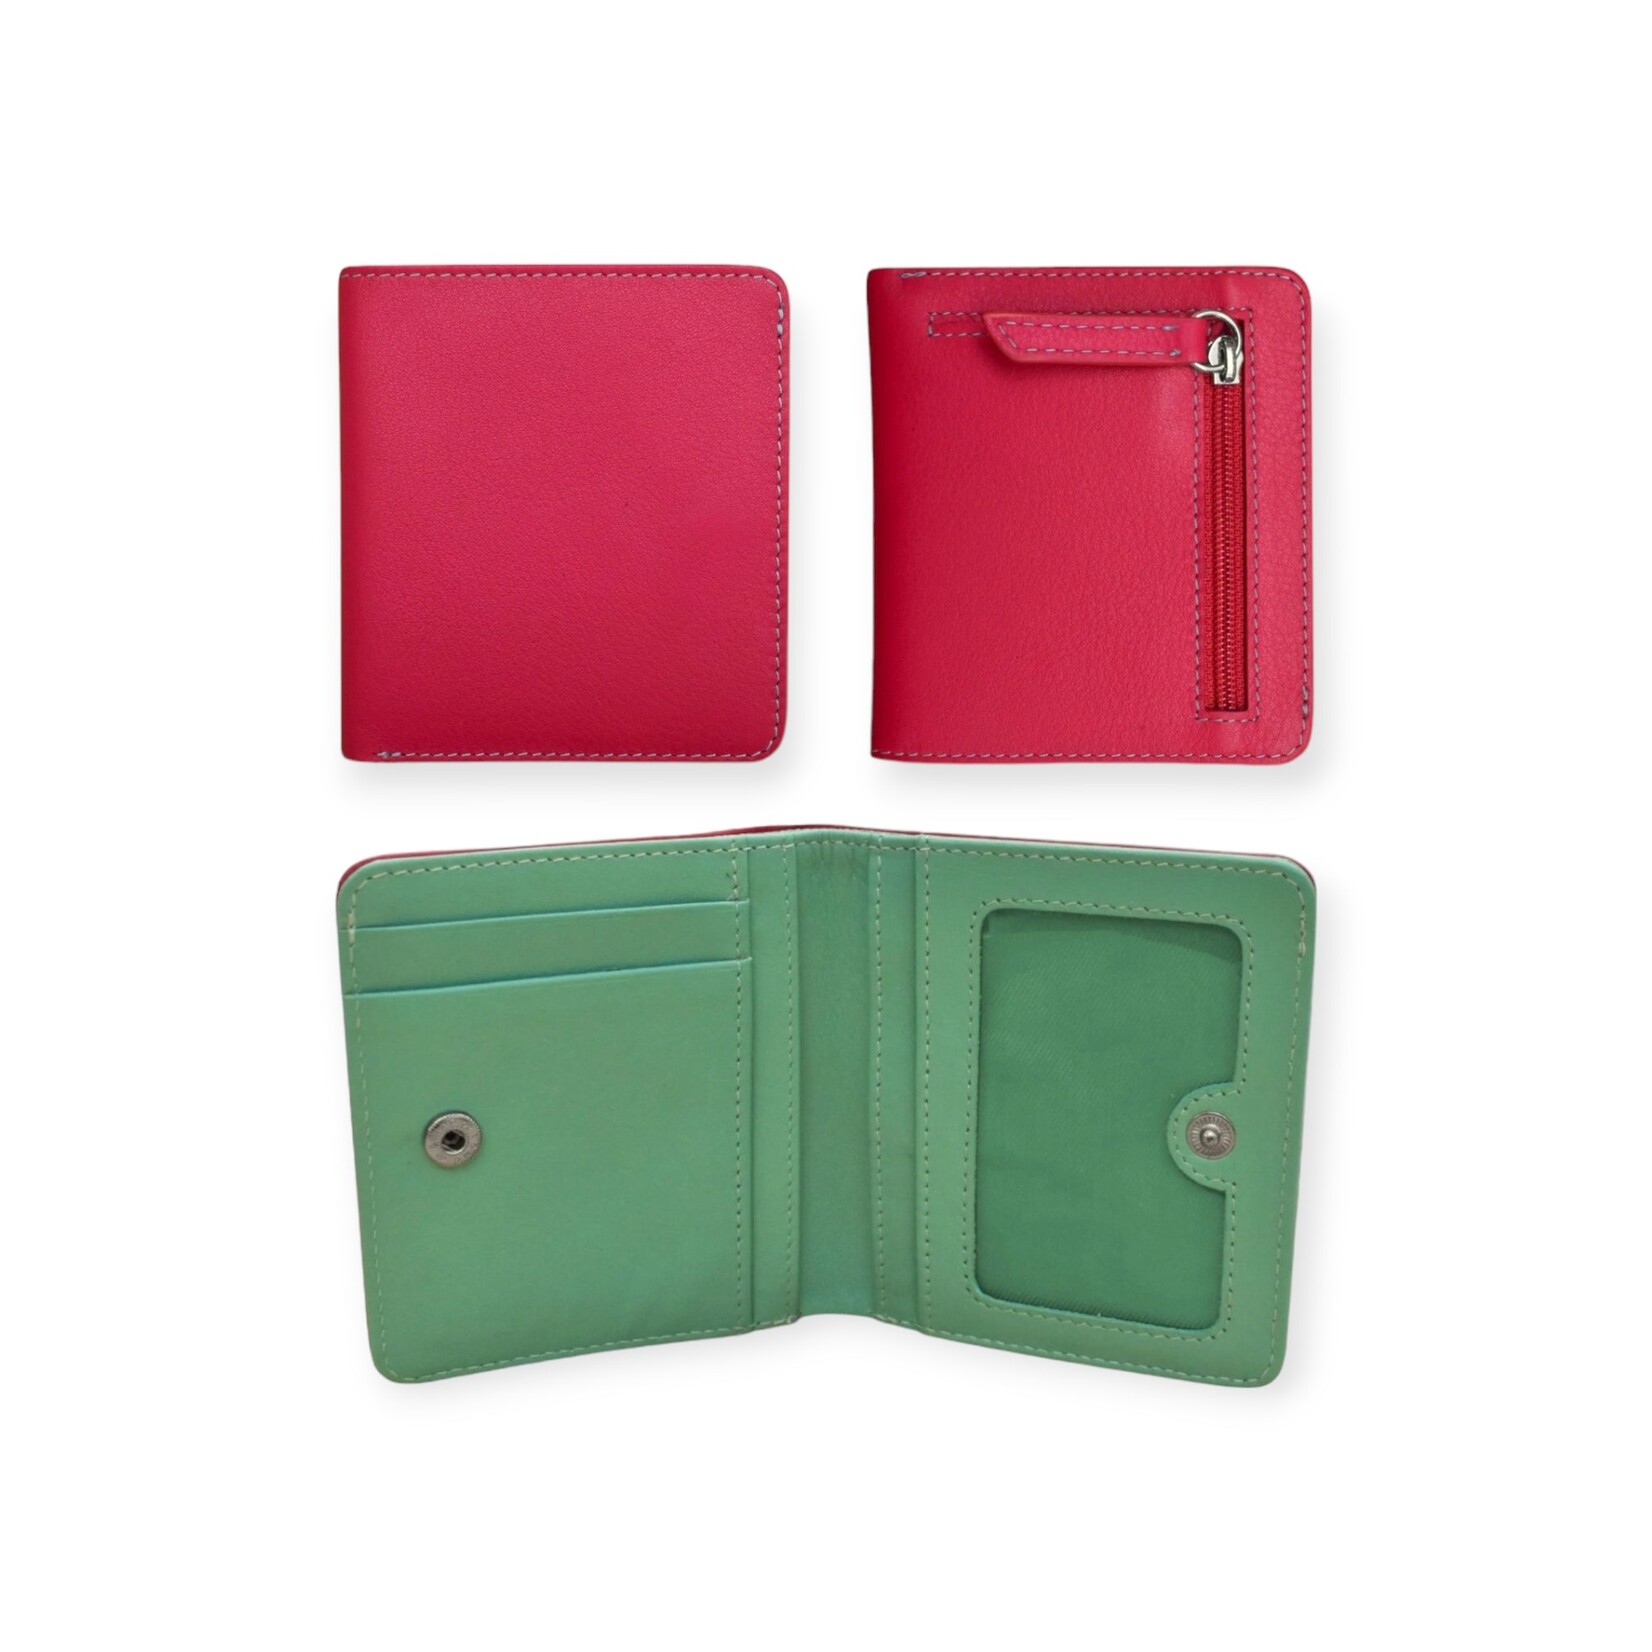 Dime Bags - Bi-Fold Eco-Friendly Wallet – The Glass Mule